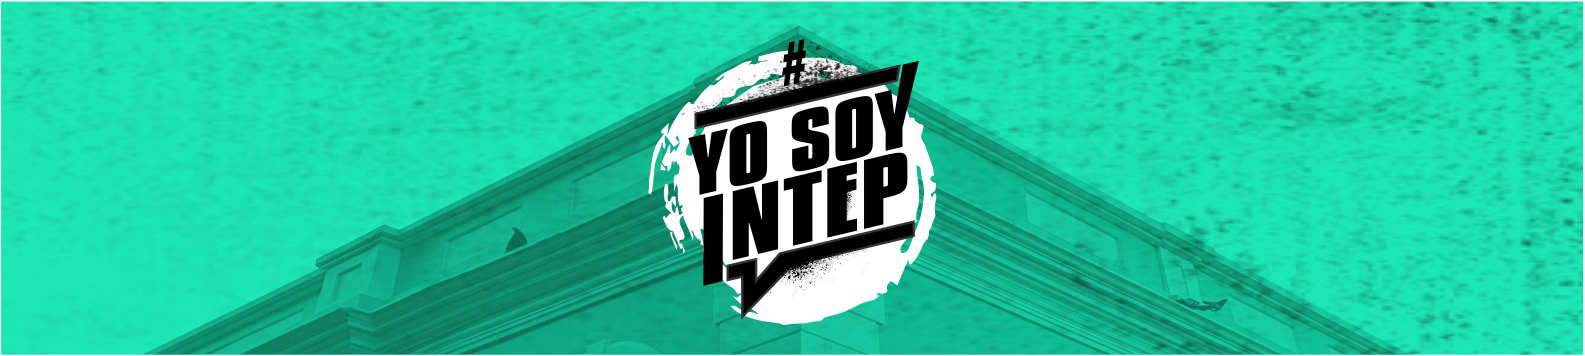 Campaña #YoSoyINTEP